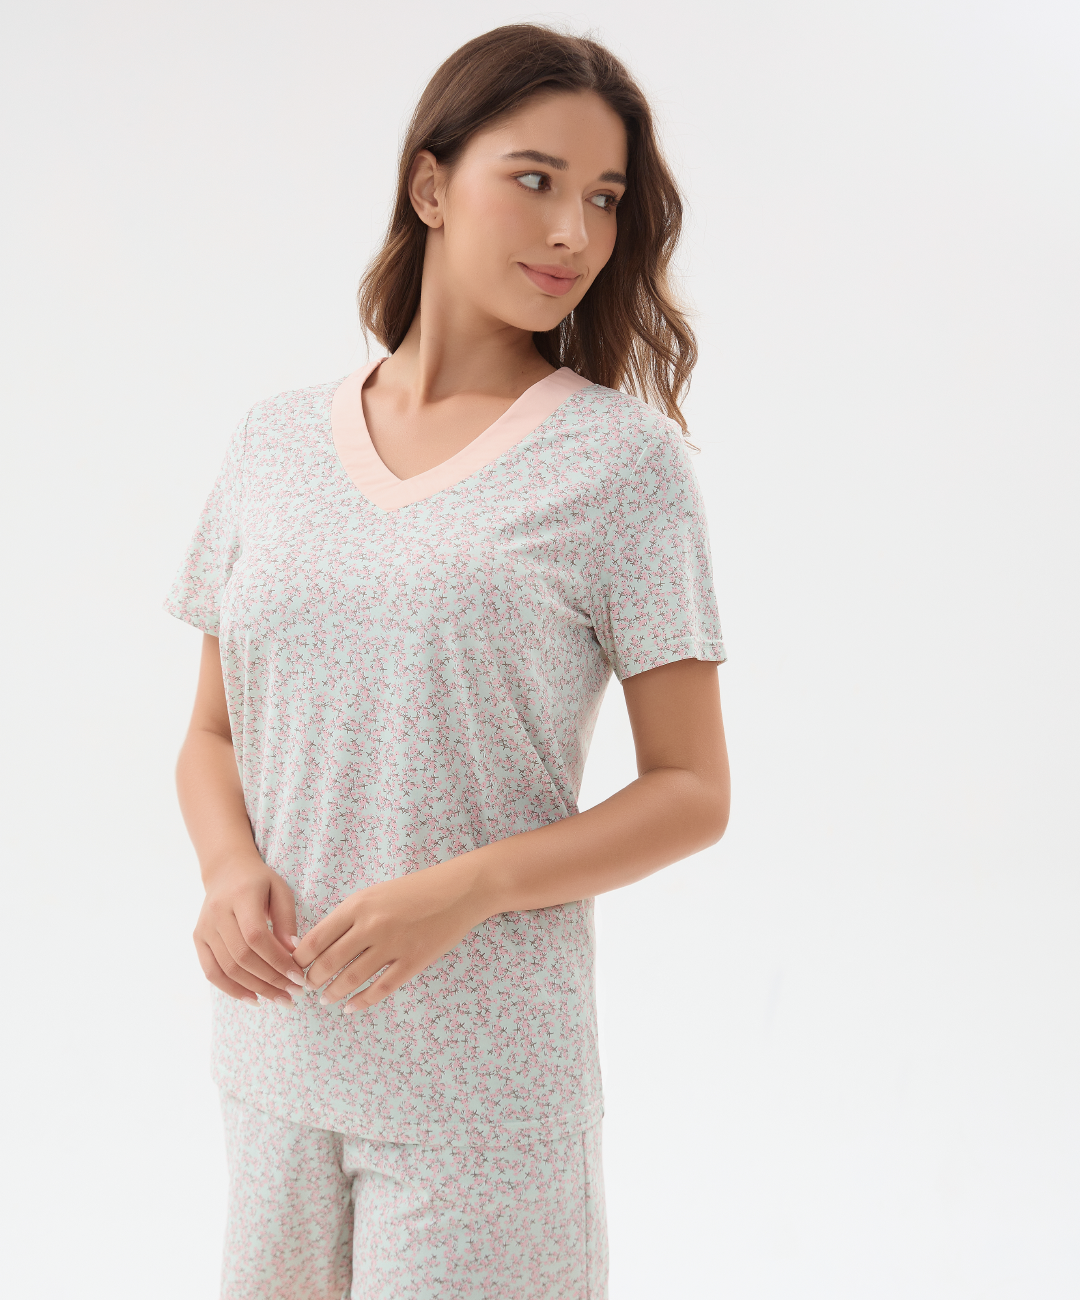 Cool Jammies Cooling Fabric Floral Short Sleeve Sleepwear Pajama Set